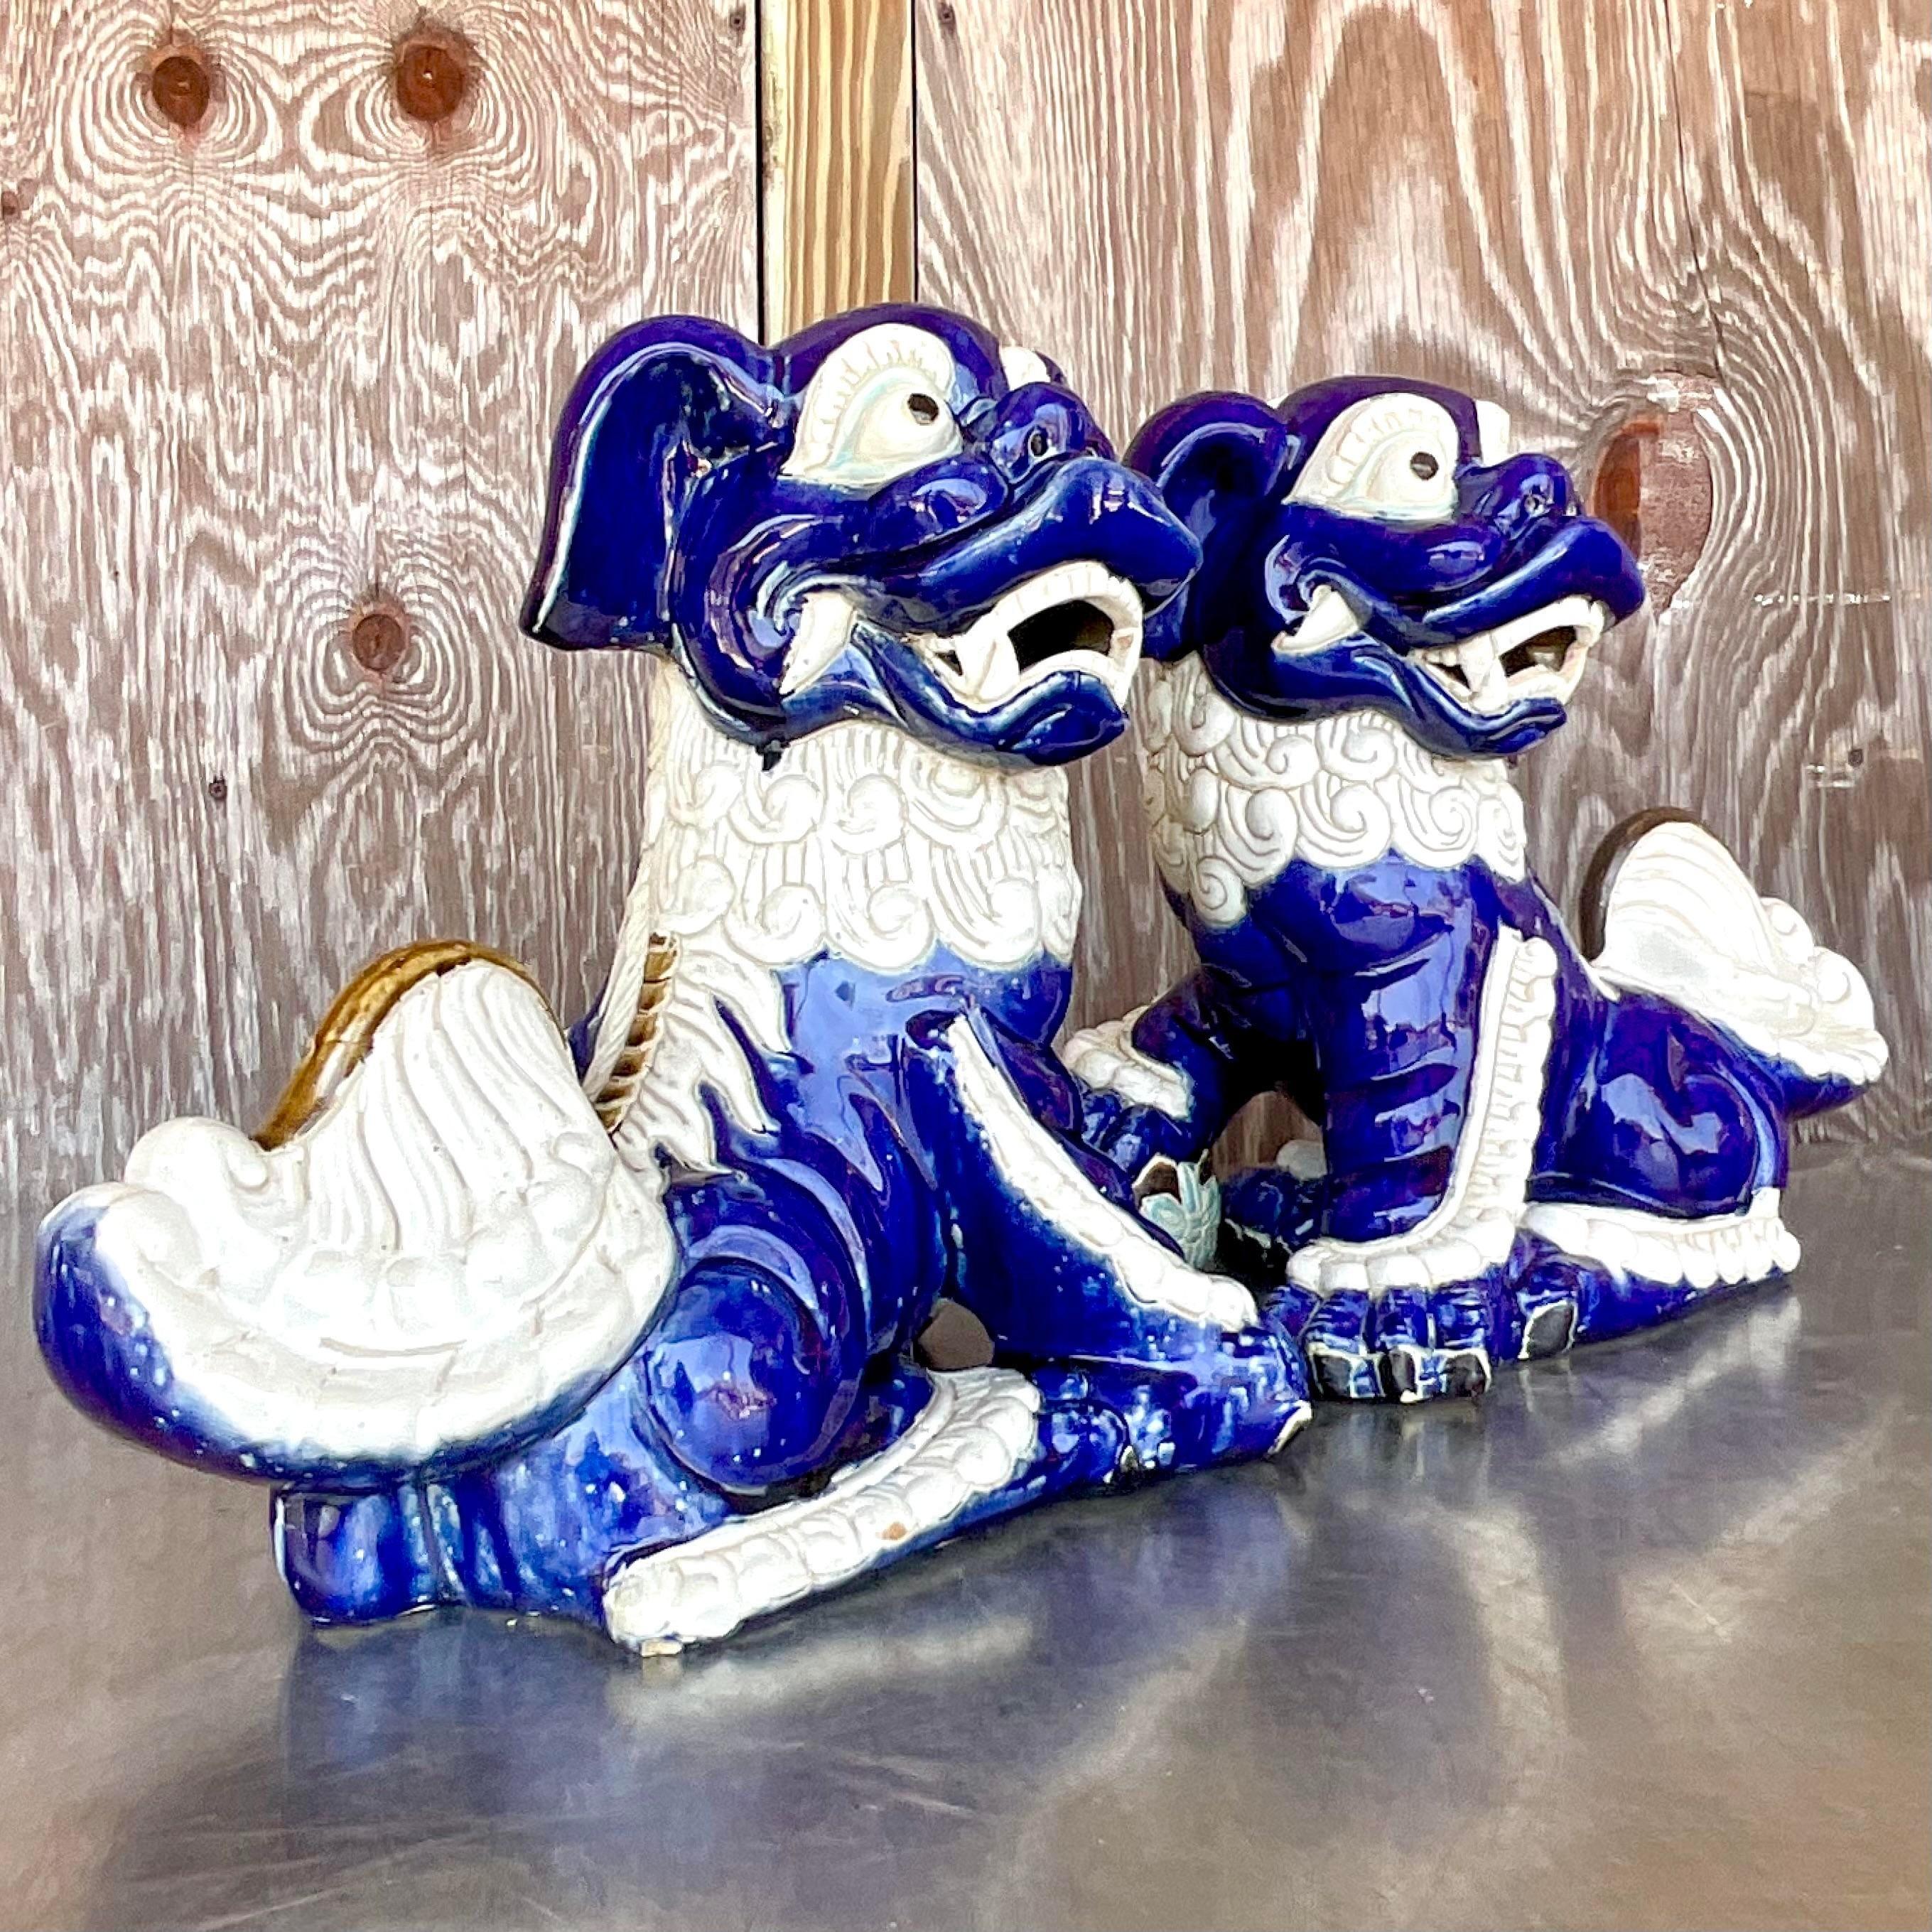 American Vintage Regency Glazed Ceramic Foo Dogs - a Pair For Sale